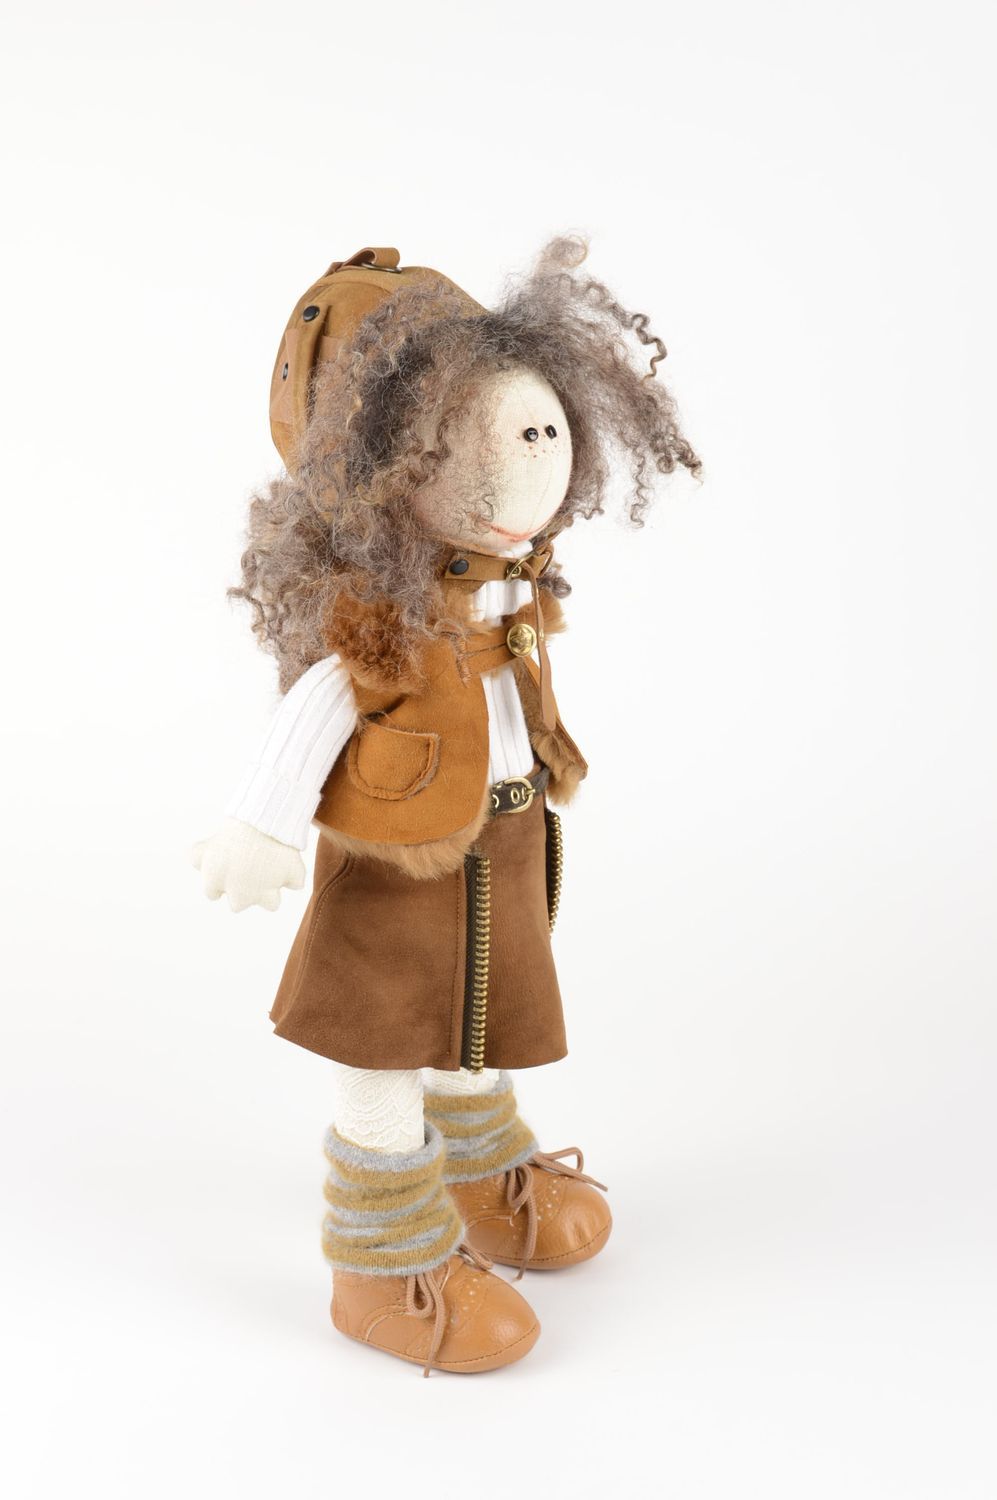 Handmade toy unusual dolls for girls gift ideas soft doll for children photo 4